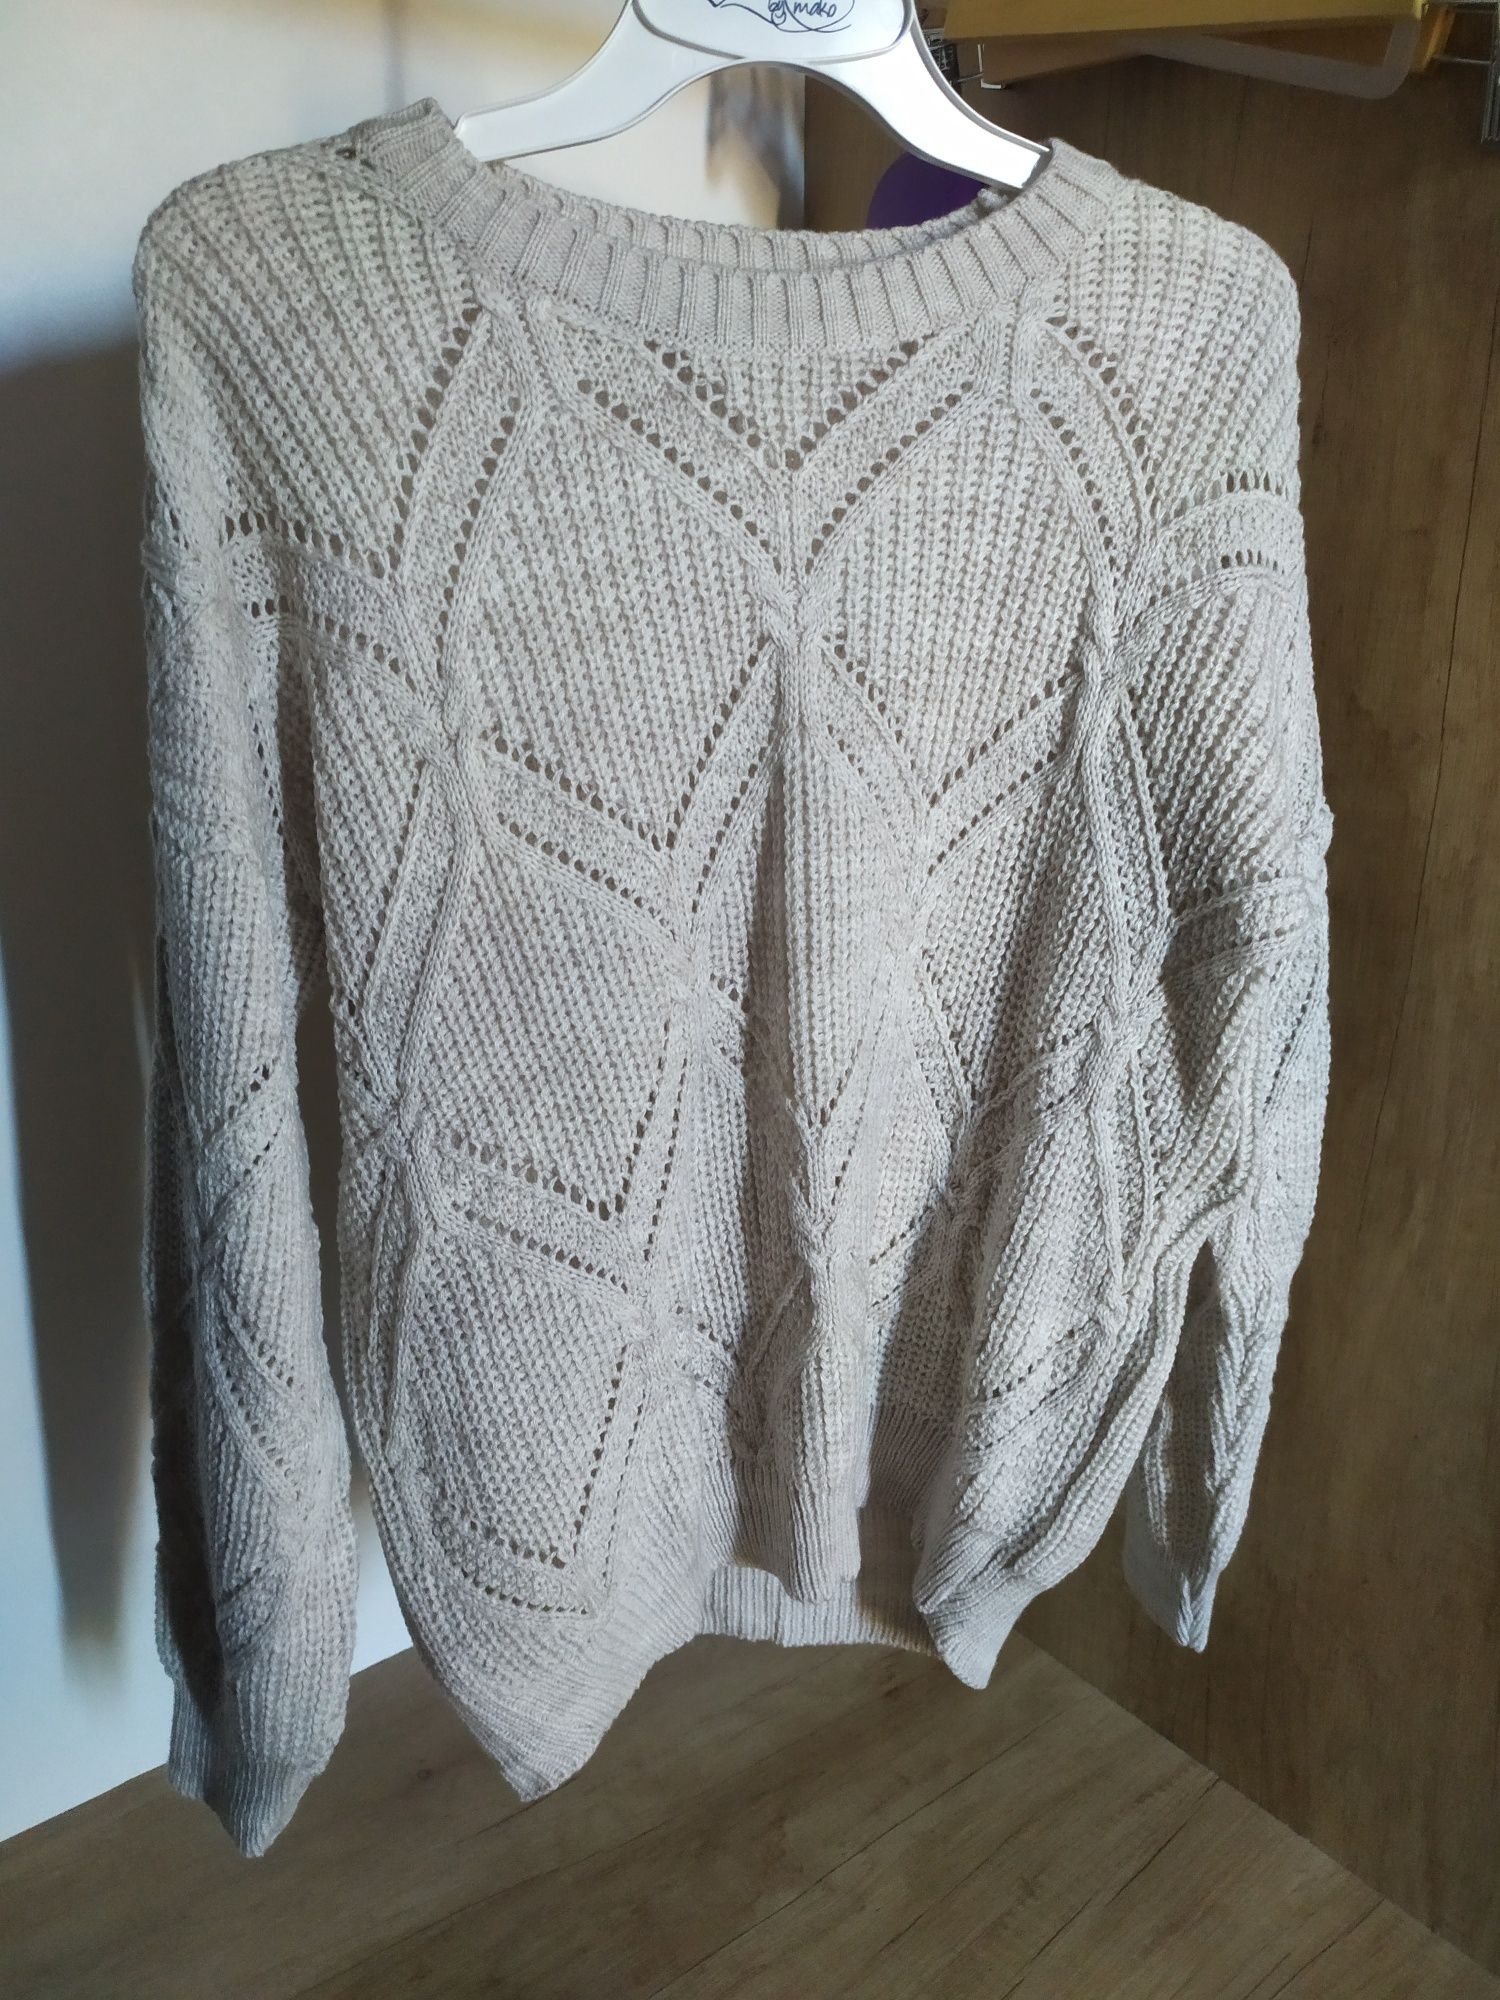 Sweterek rozmiar S/M